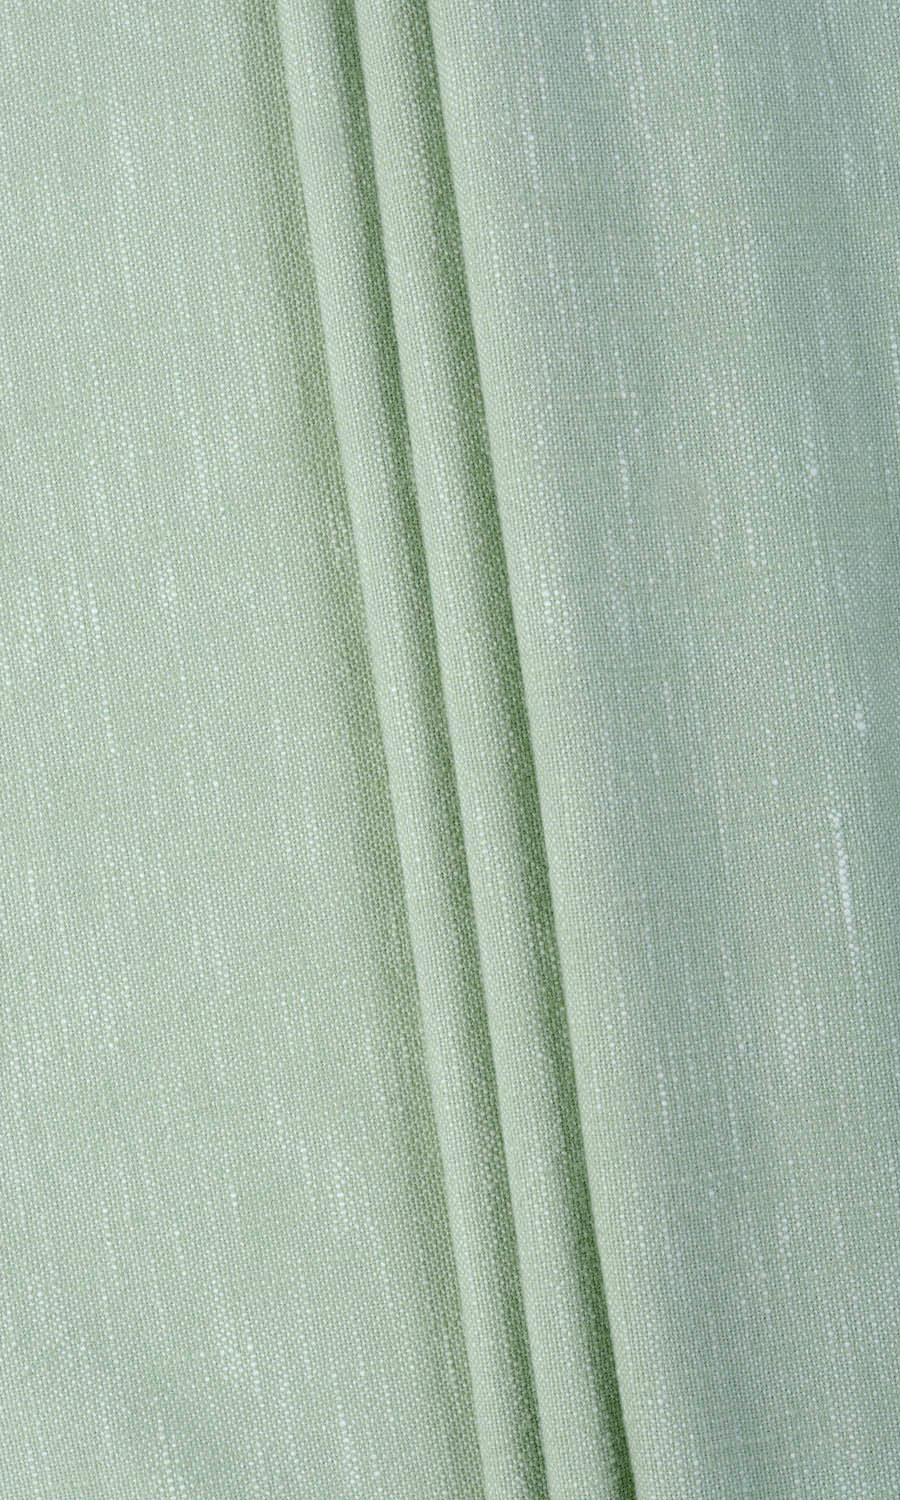 'Denibeau' Made-to-Order Window Curtains (Sea Green/ Blue)